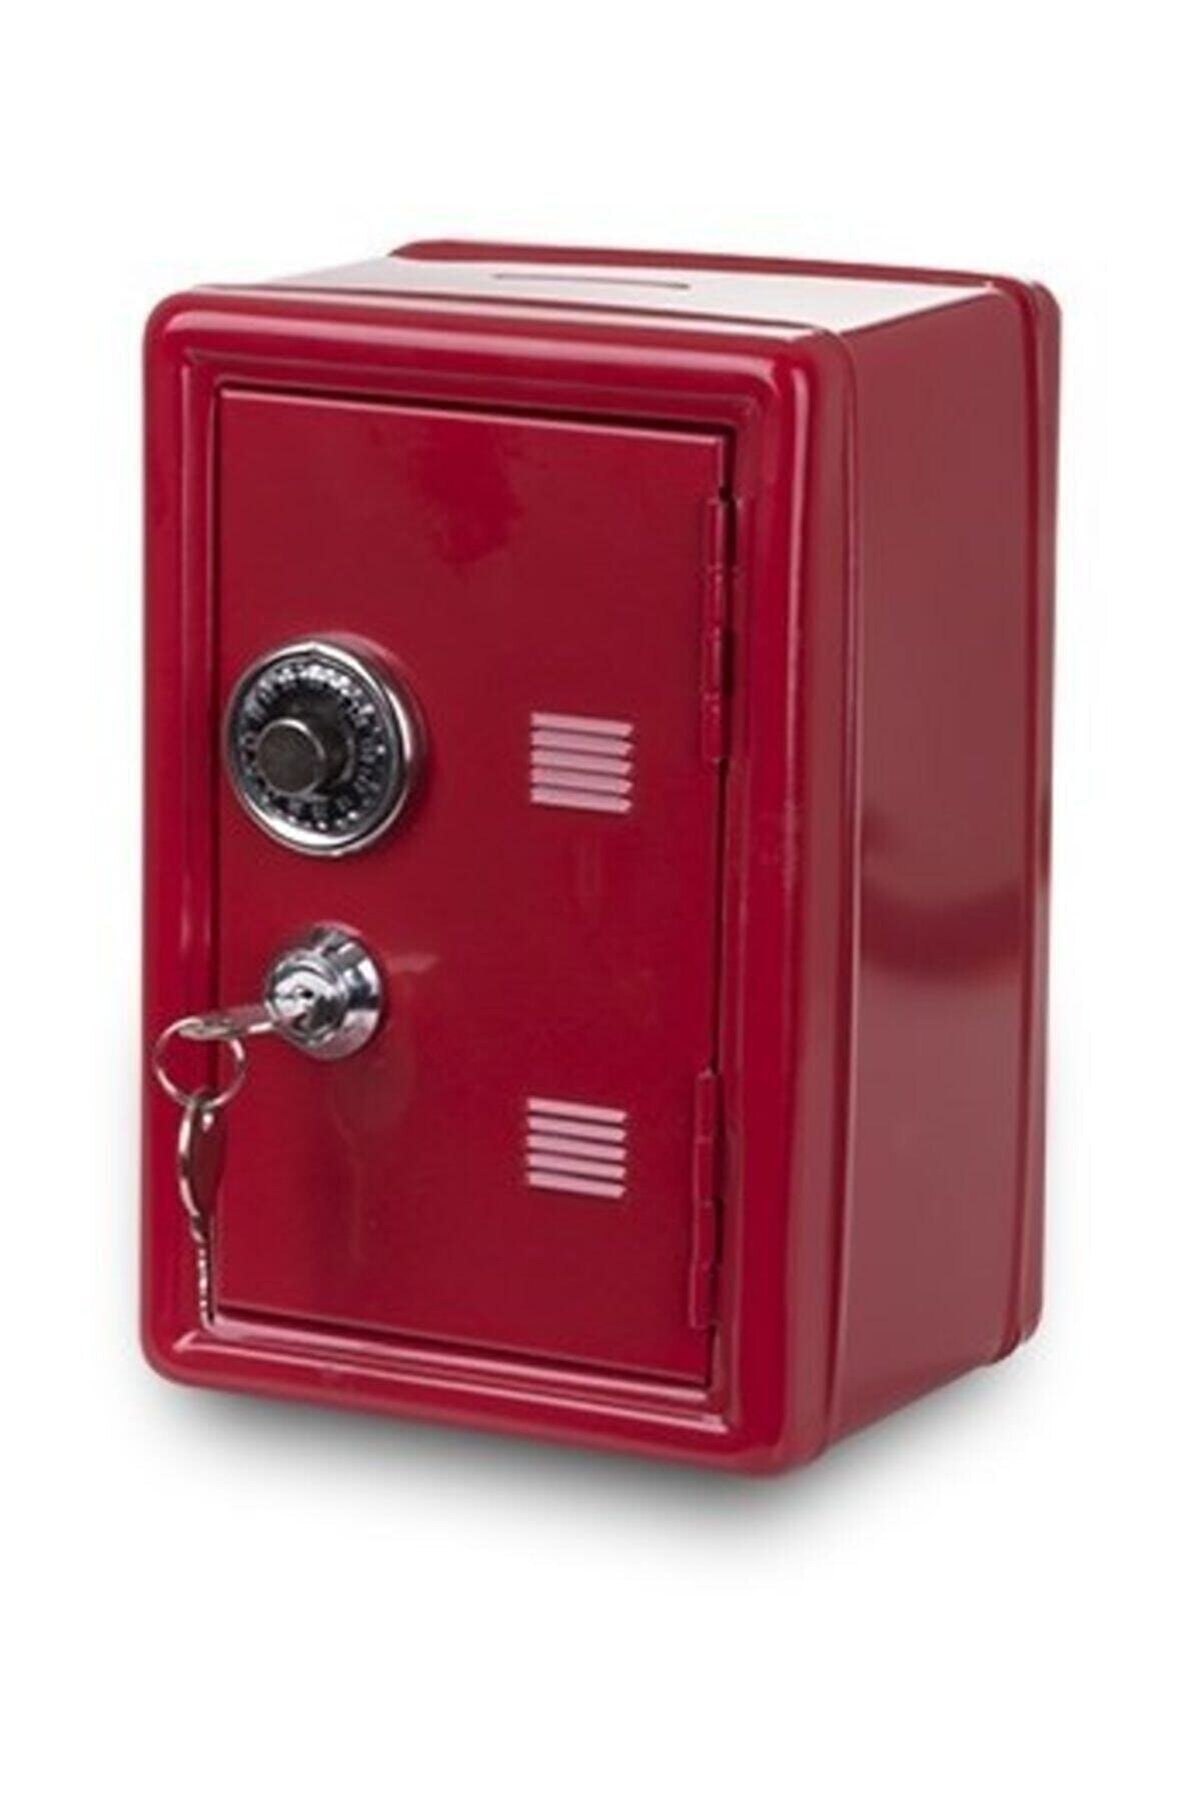 ELBA Kilitli Kasa Kumbara Anahtarlı Mini Metal Para Kasası - Kırmızı